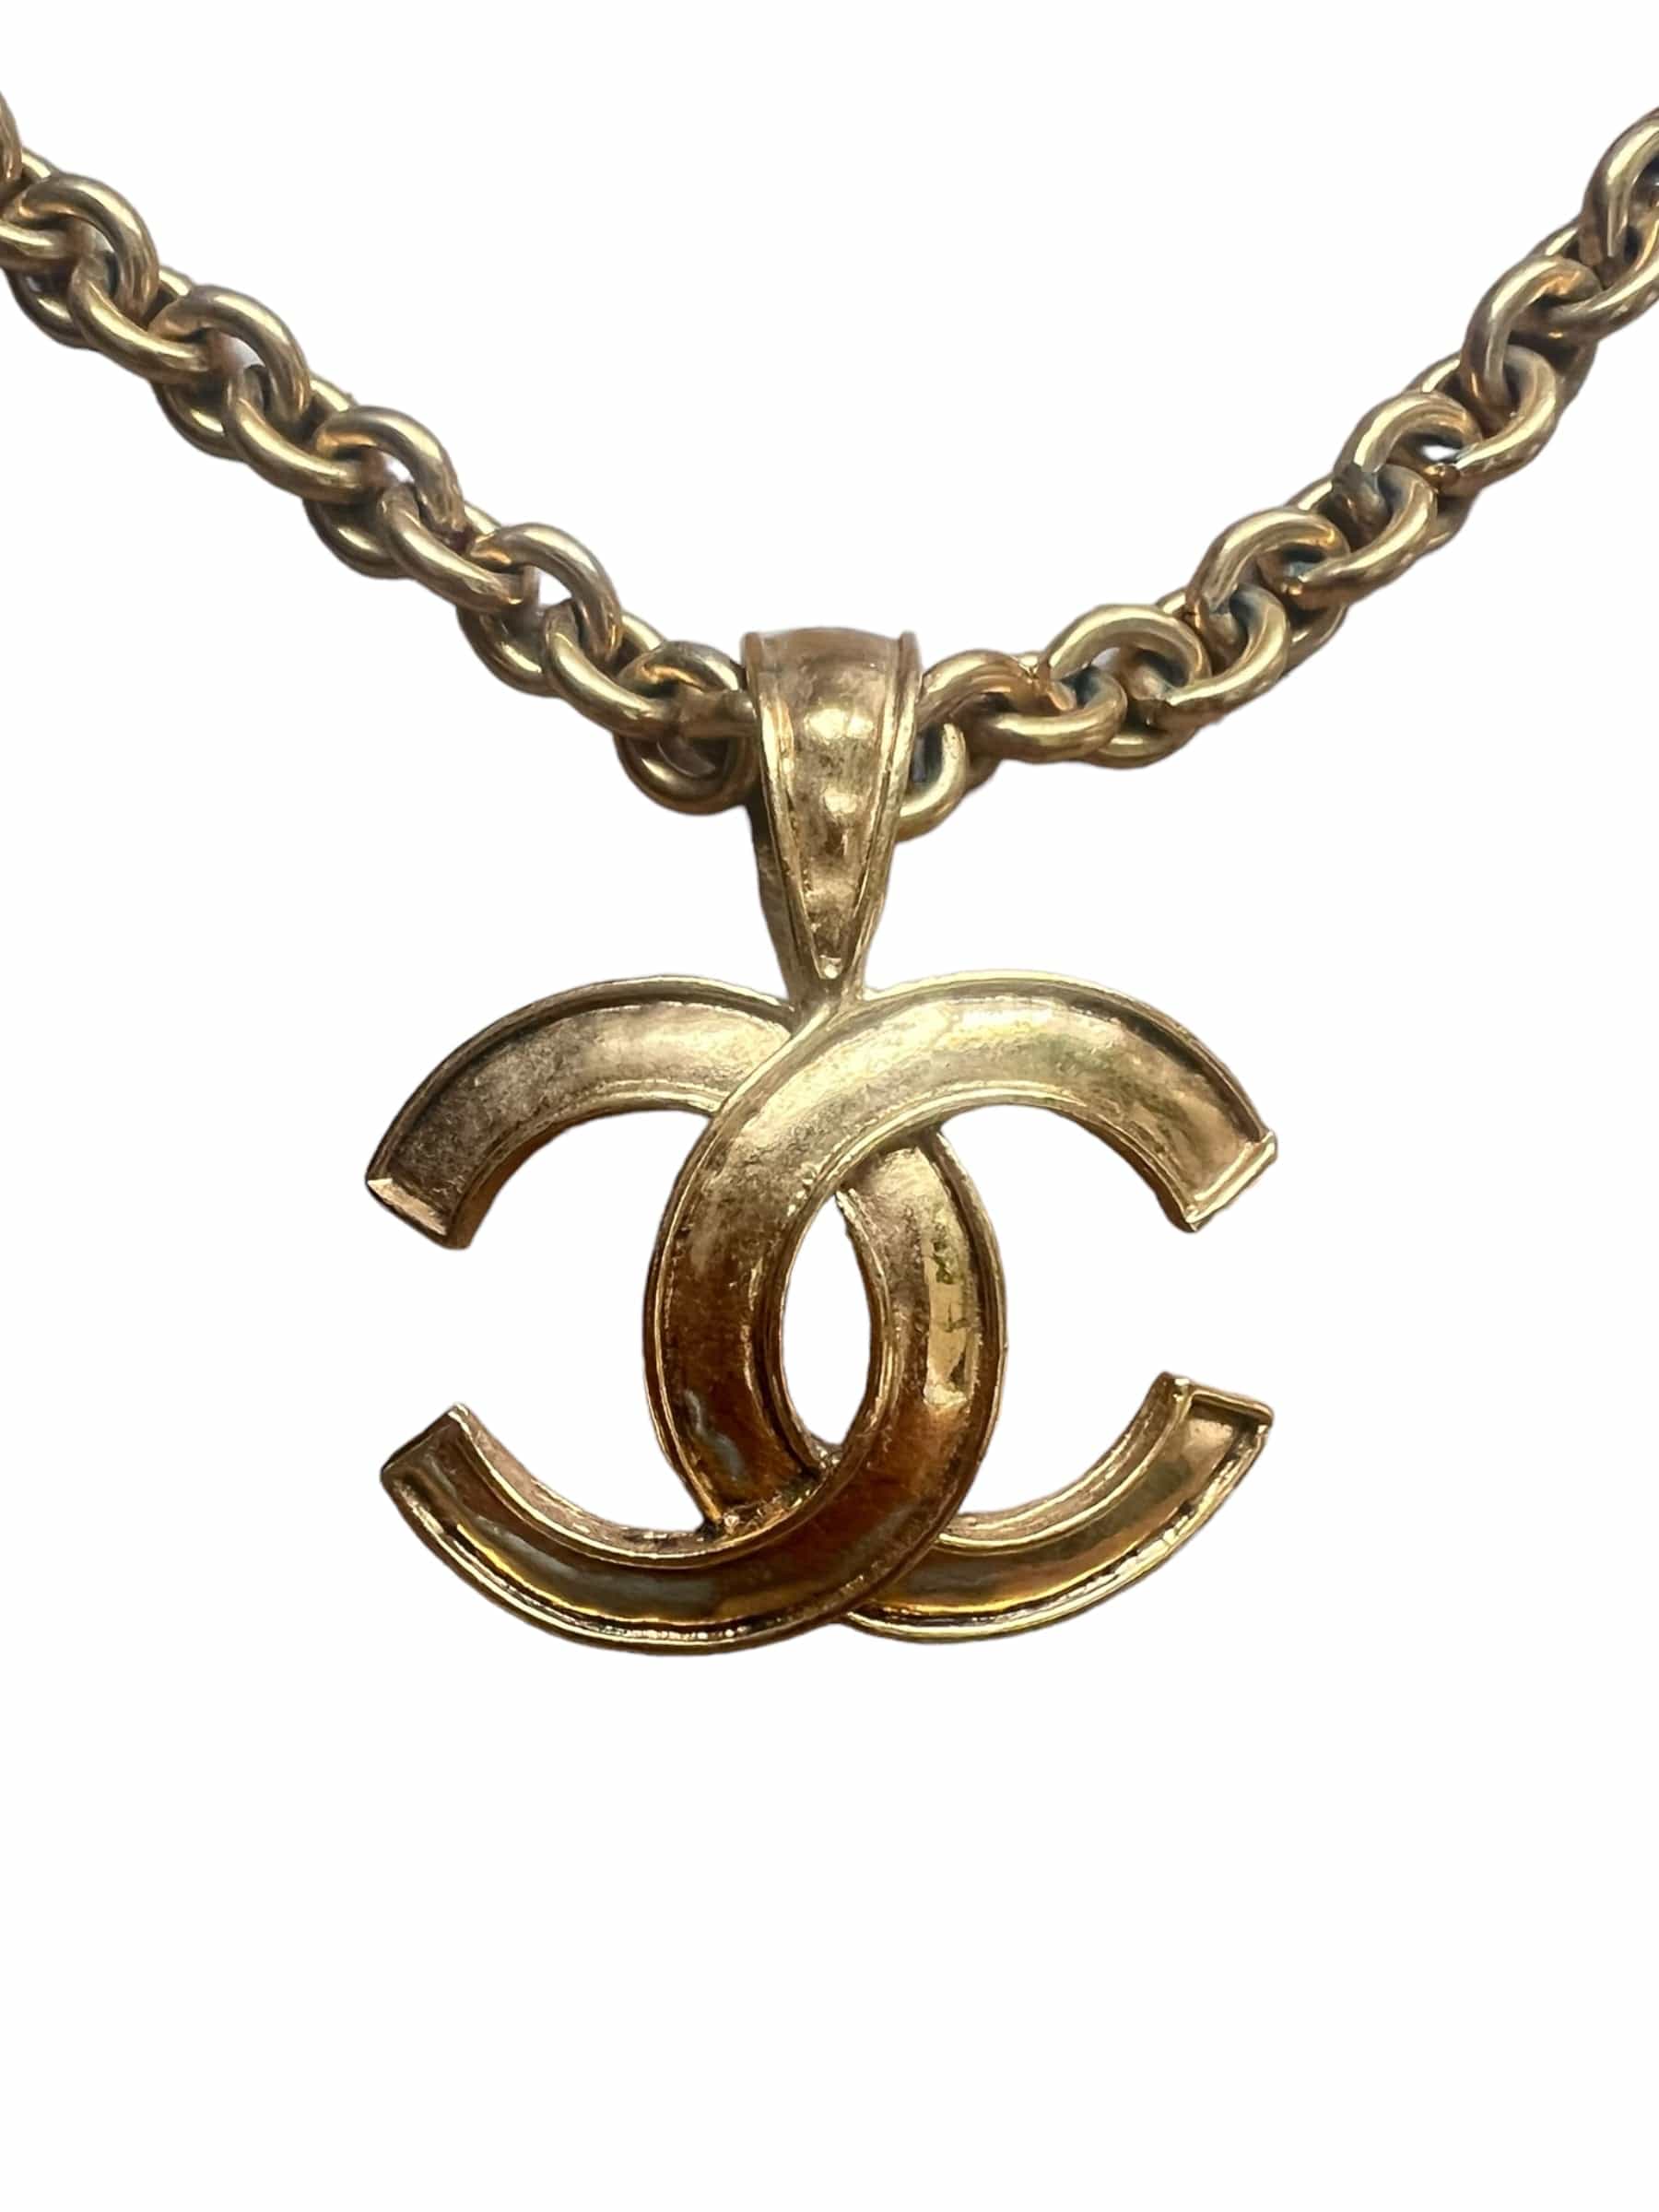 Chanel Chanel Coco Mark 94p Chain Necklace UKL1381